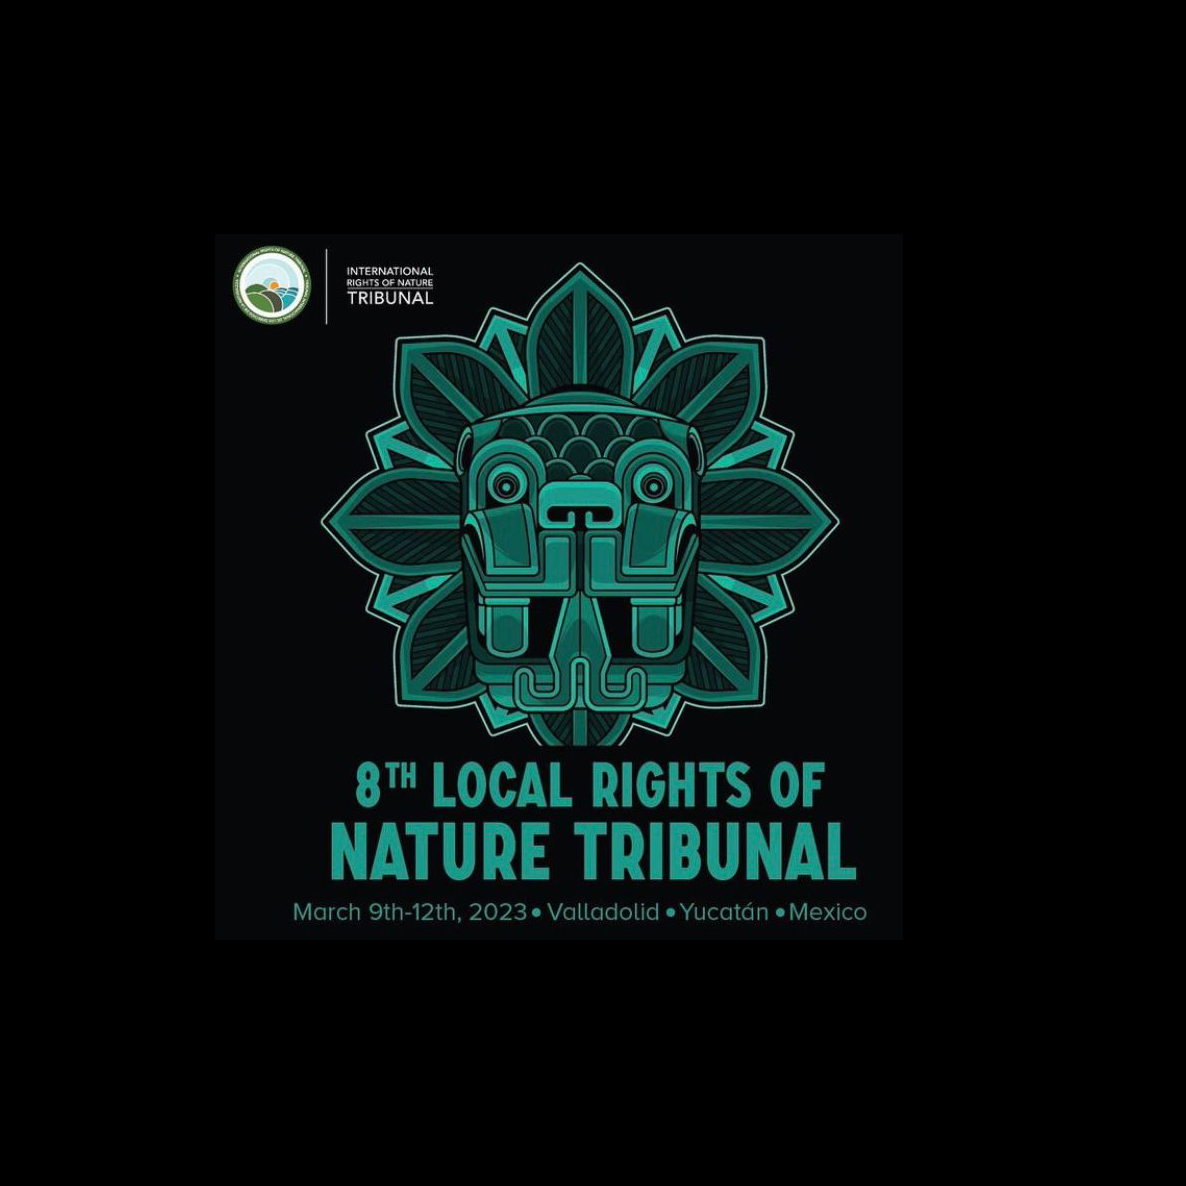 Tribunal Local de Derechos de la Naturaleza: Tren Maya